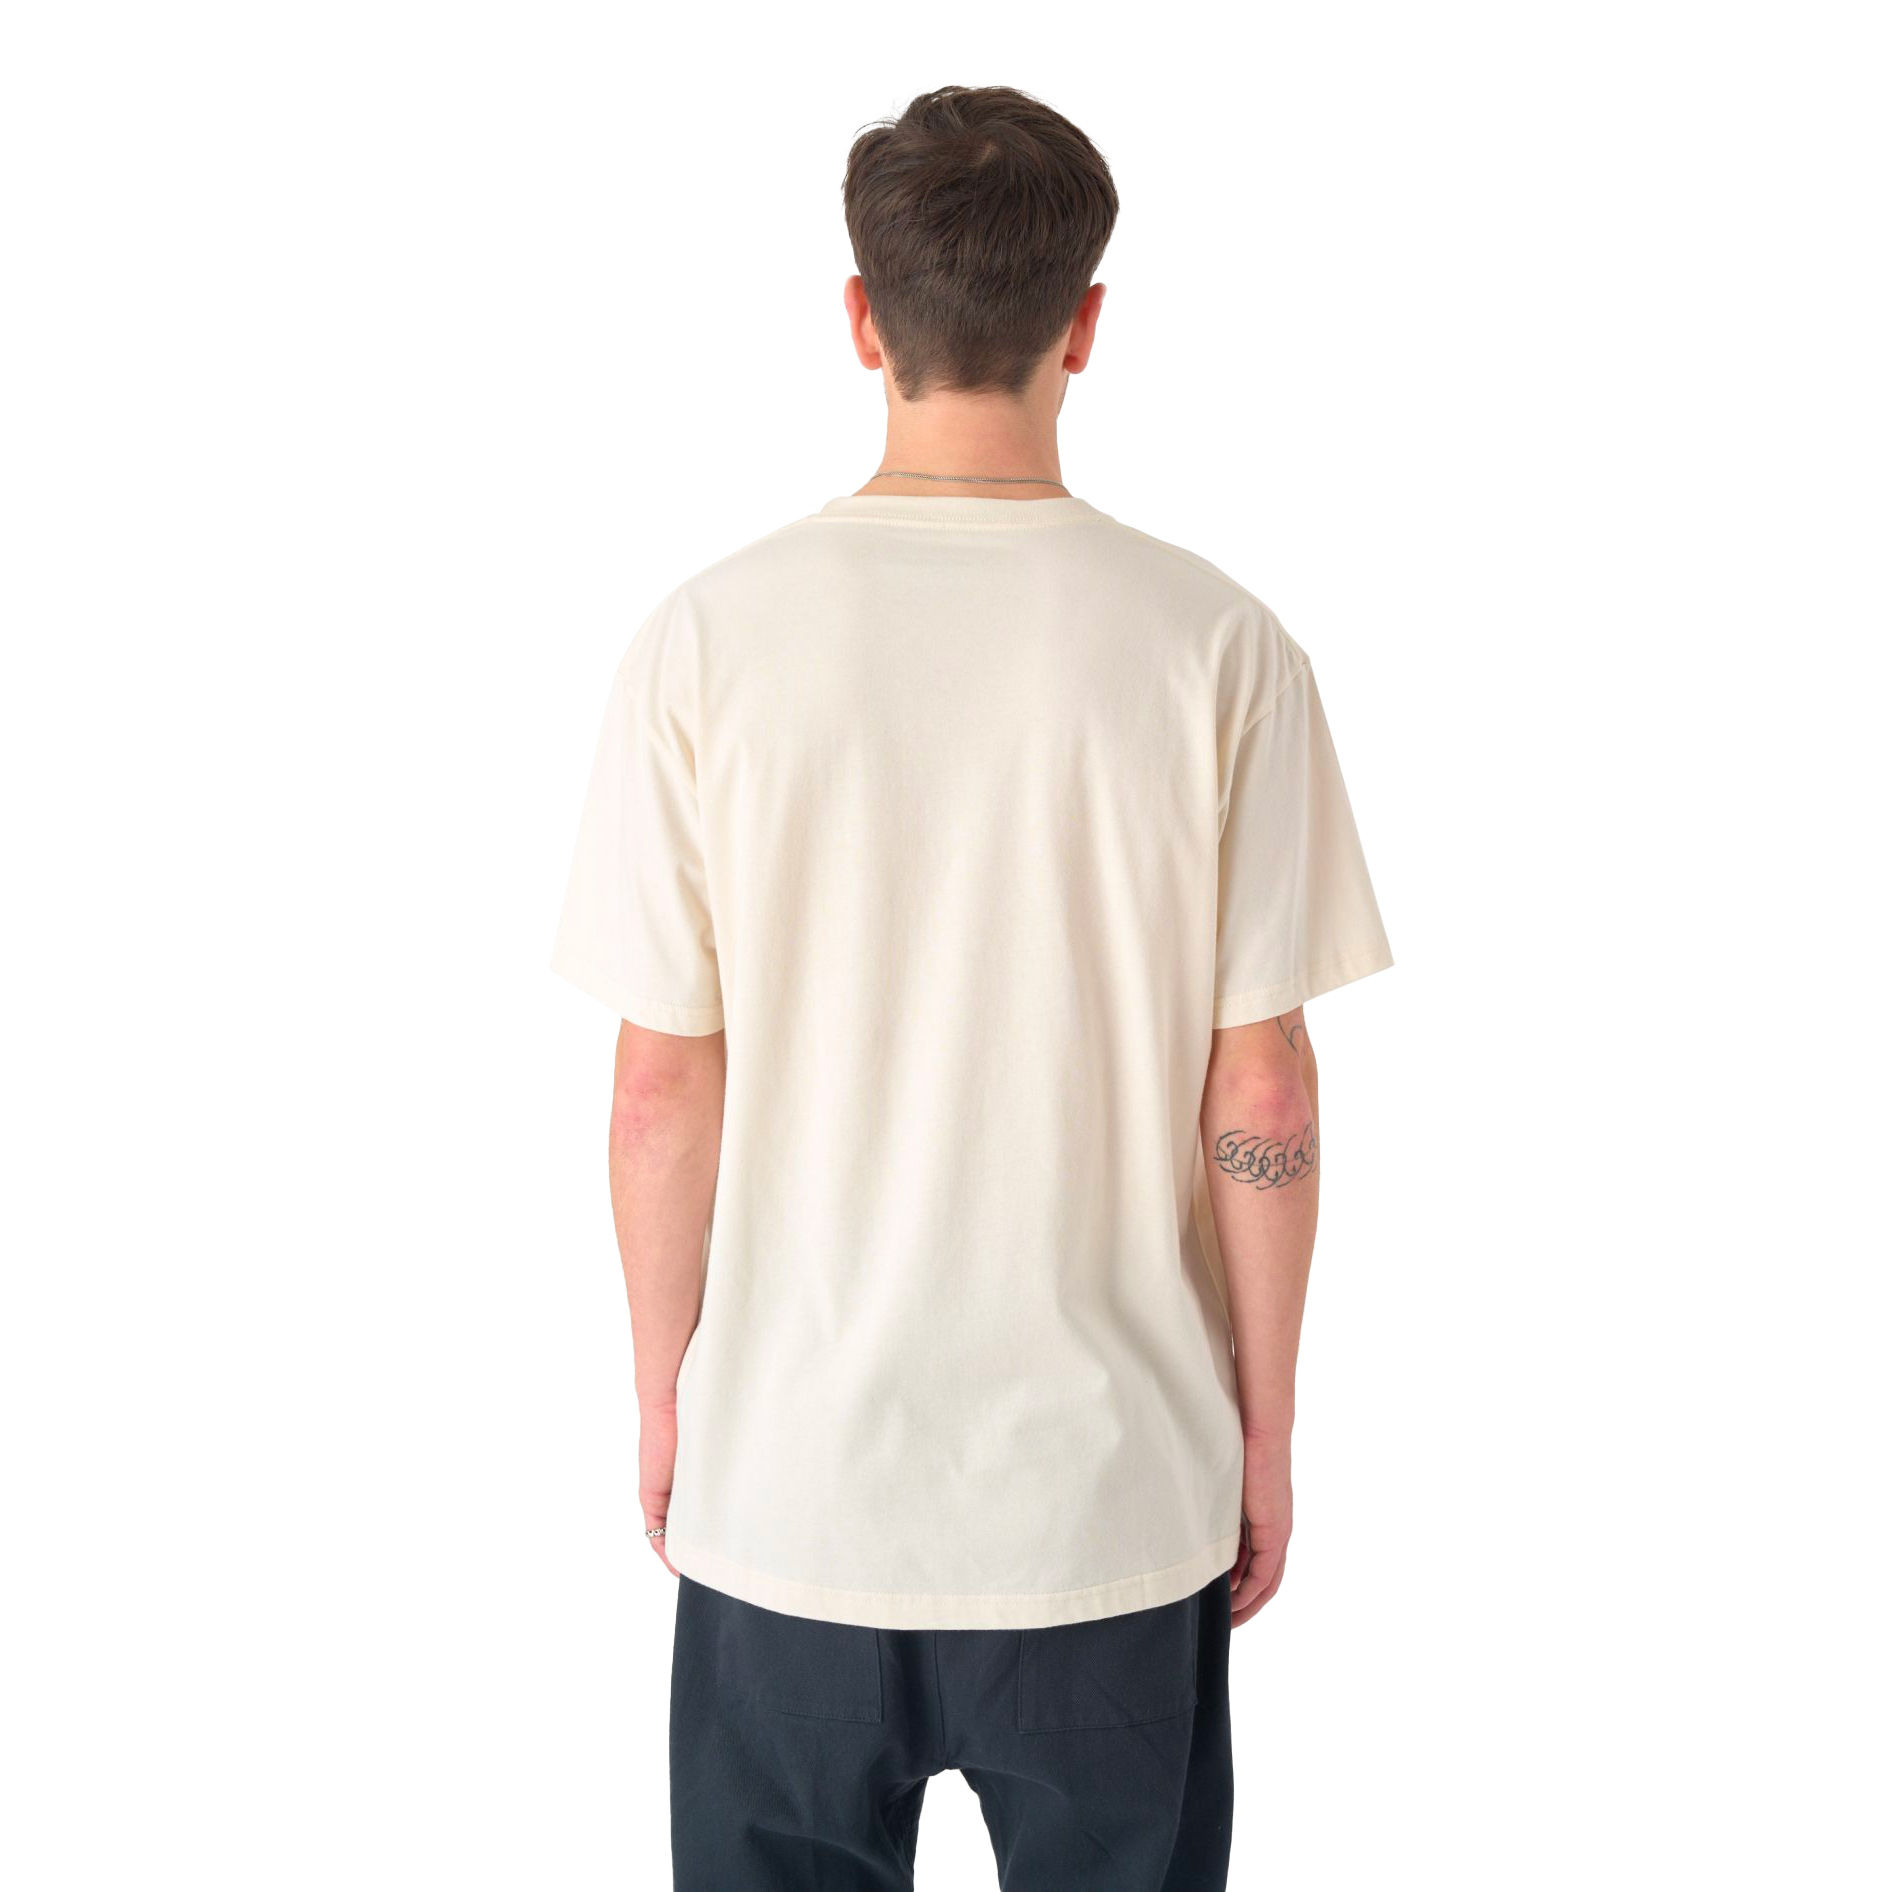 Cleptomanicx T-Shirt Feinkost (raw undyed)